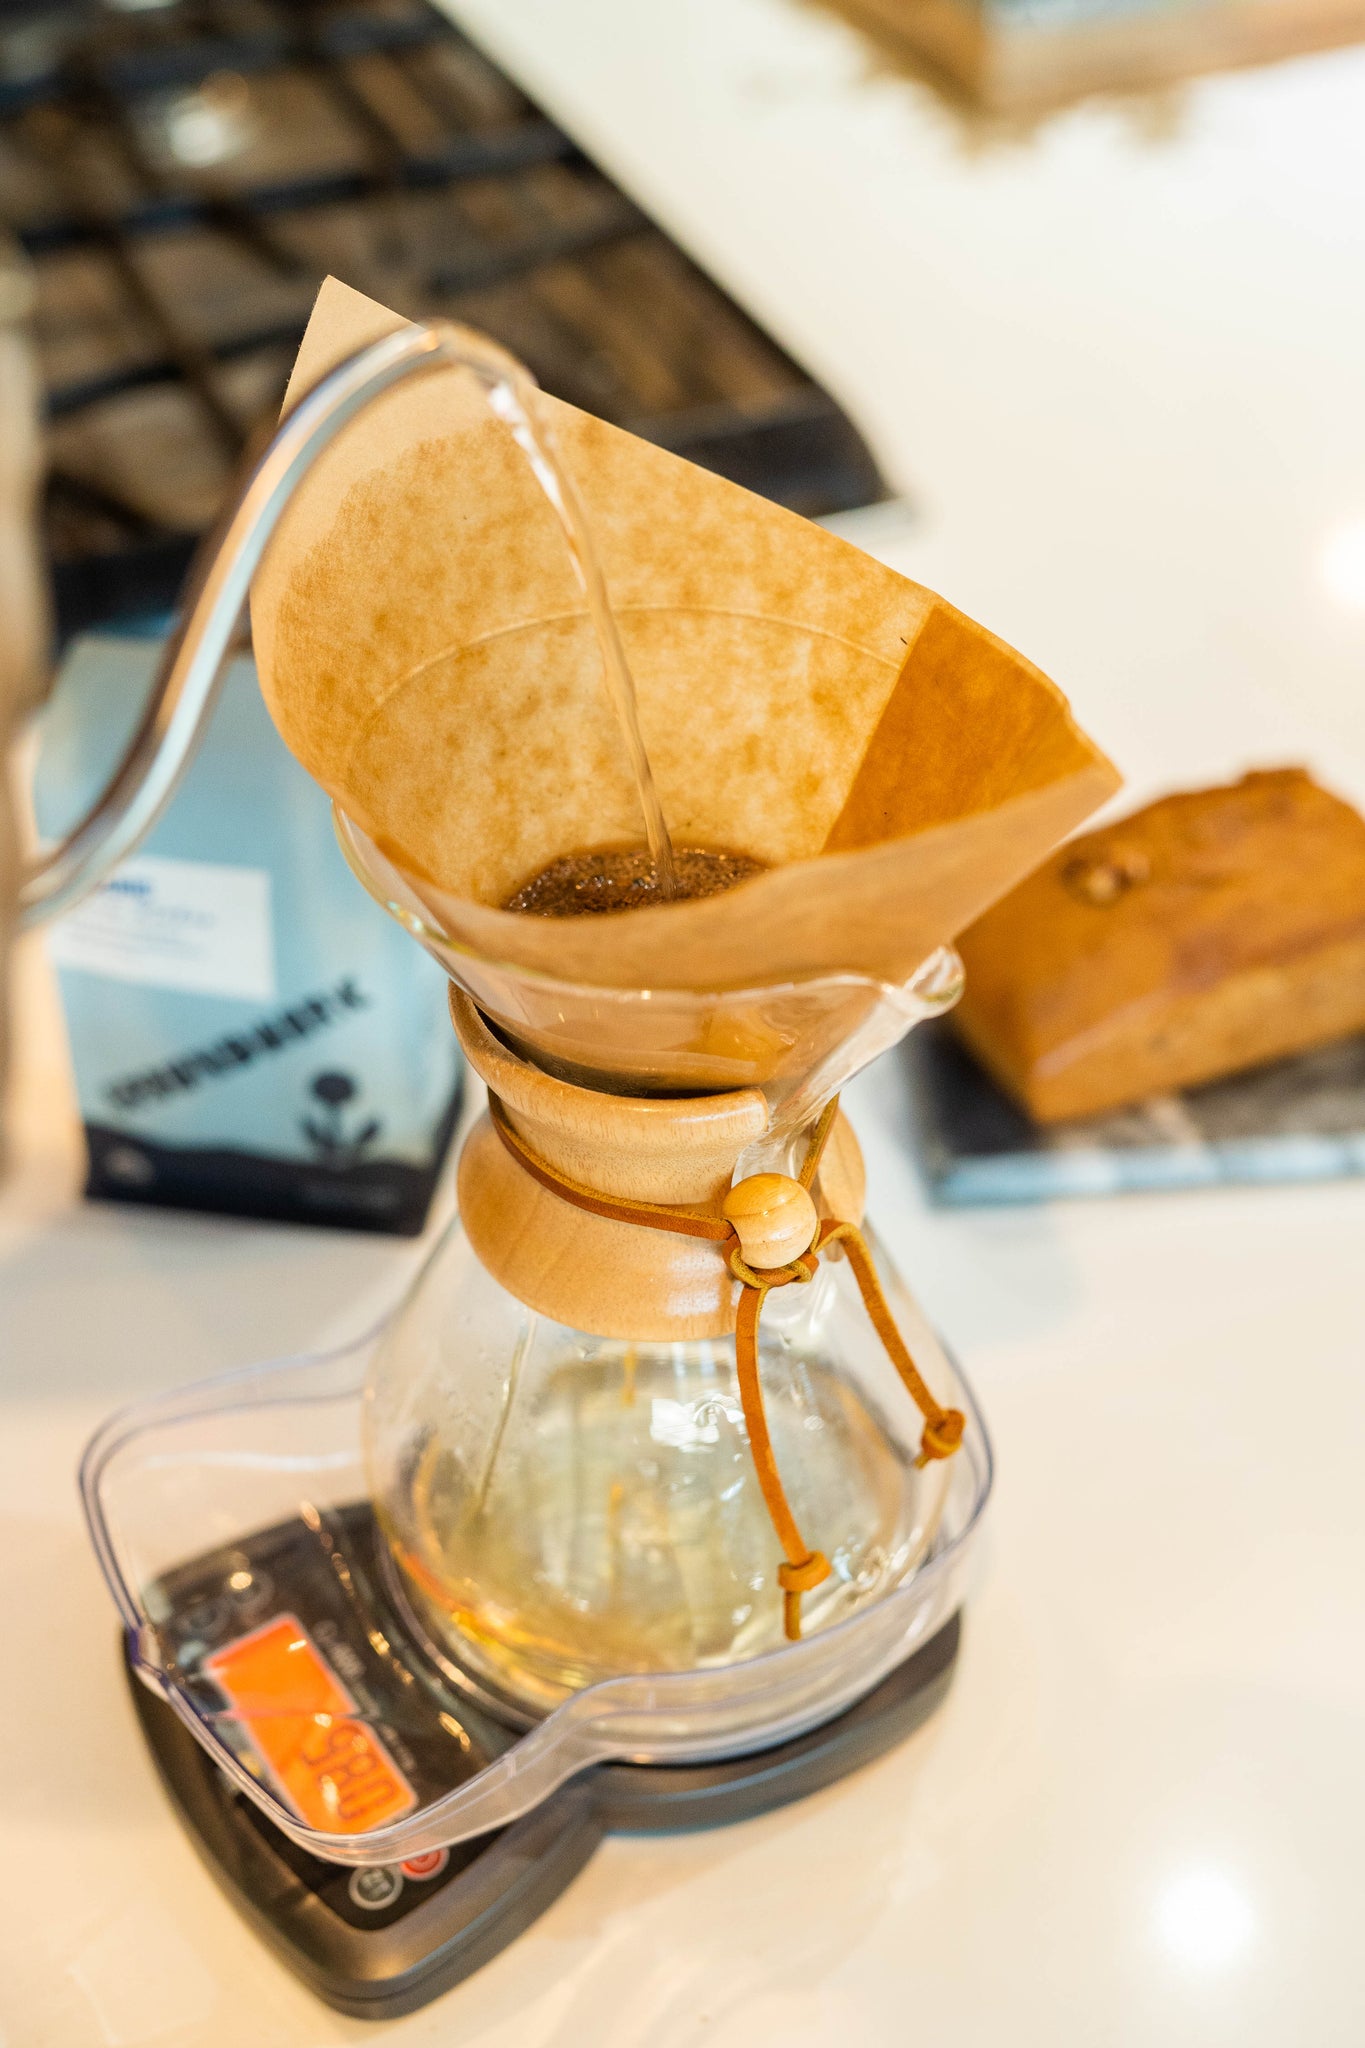 Chemex 8 Cup Coffee Maker, Modern General